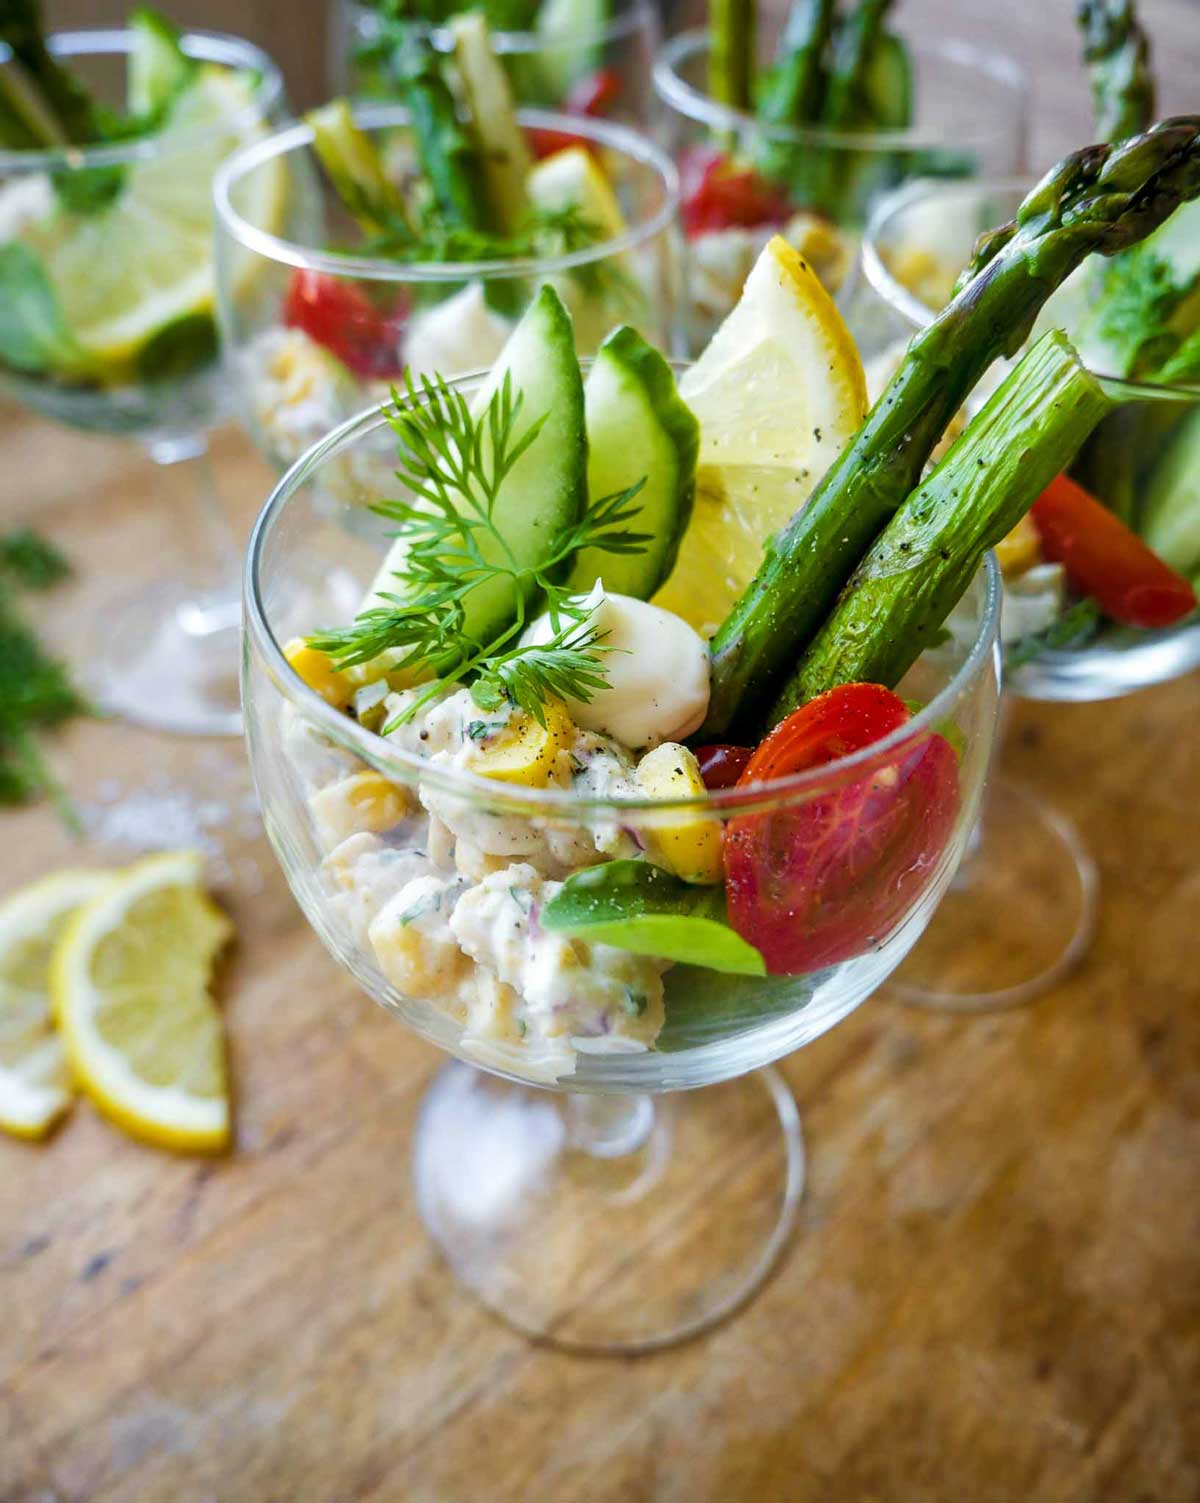 skøn cocktail med grøntsager og kikærtesalat vegansk opskrift